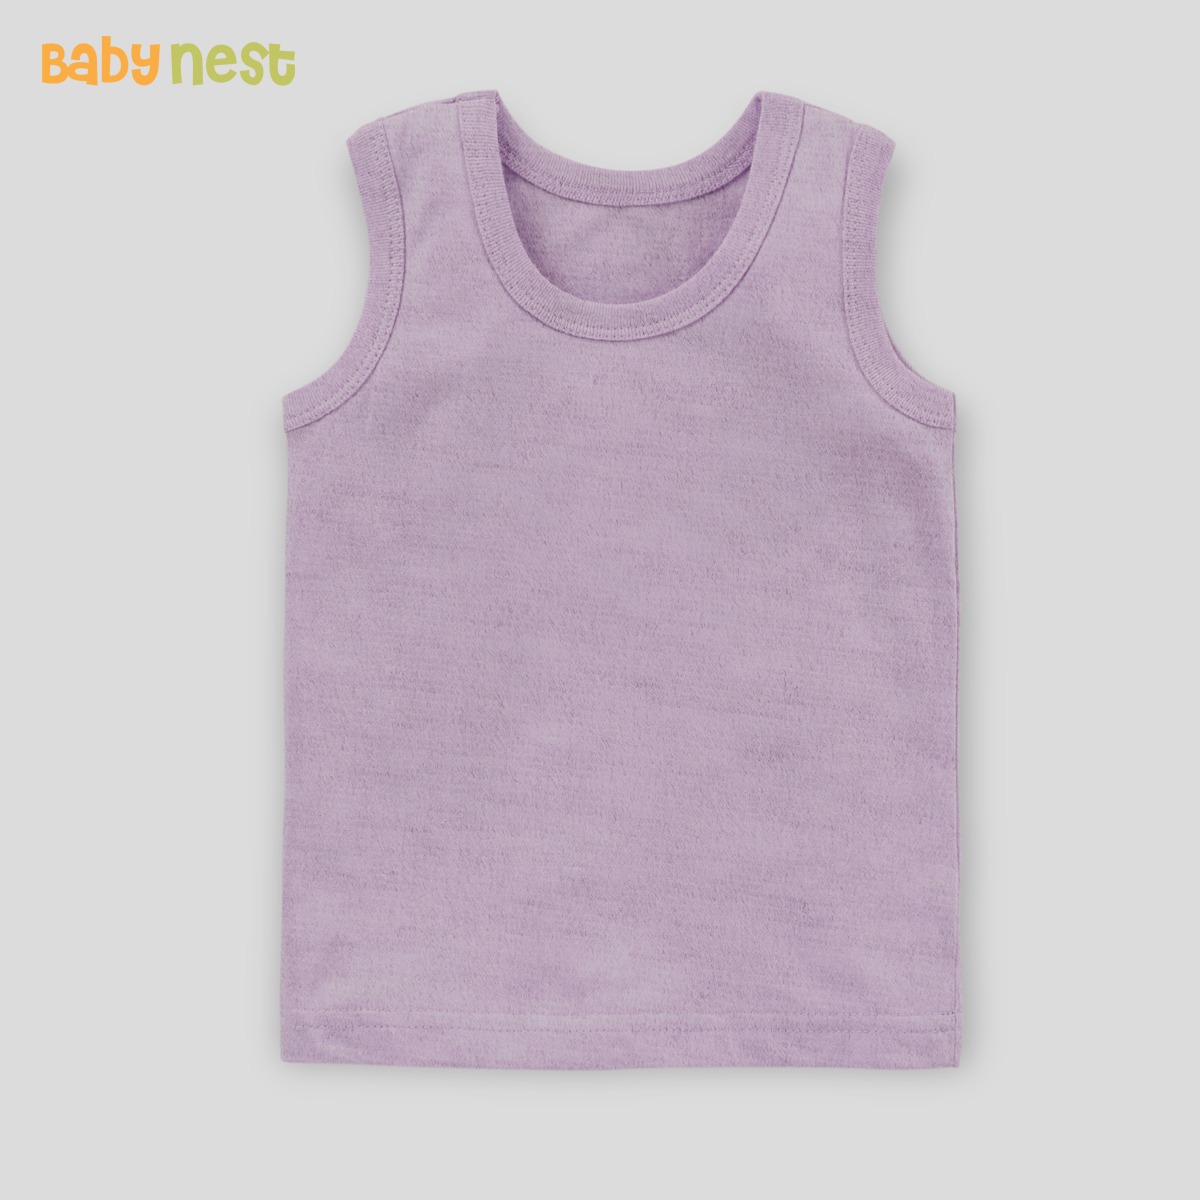 BNBBS-181 – Sandos For Kids – Purple Textured